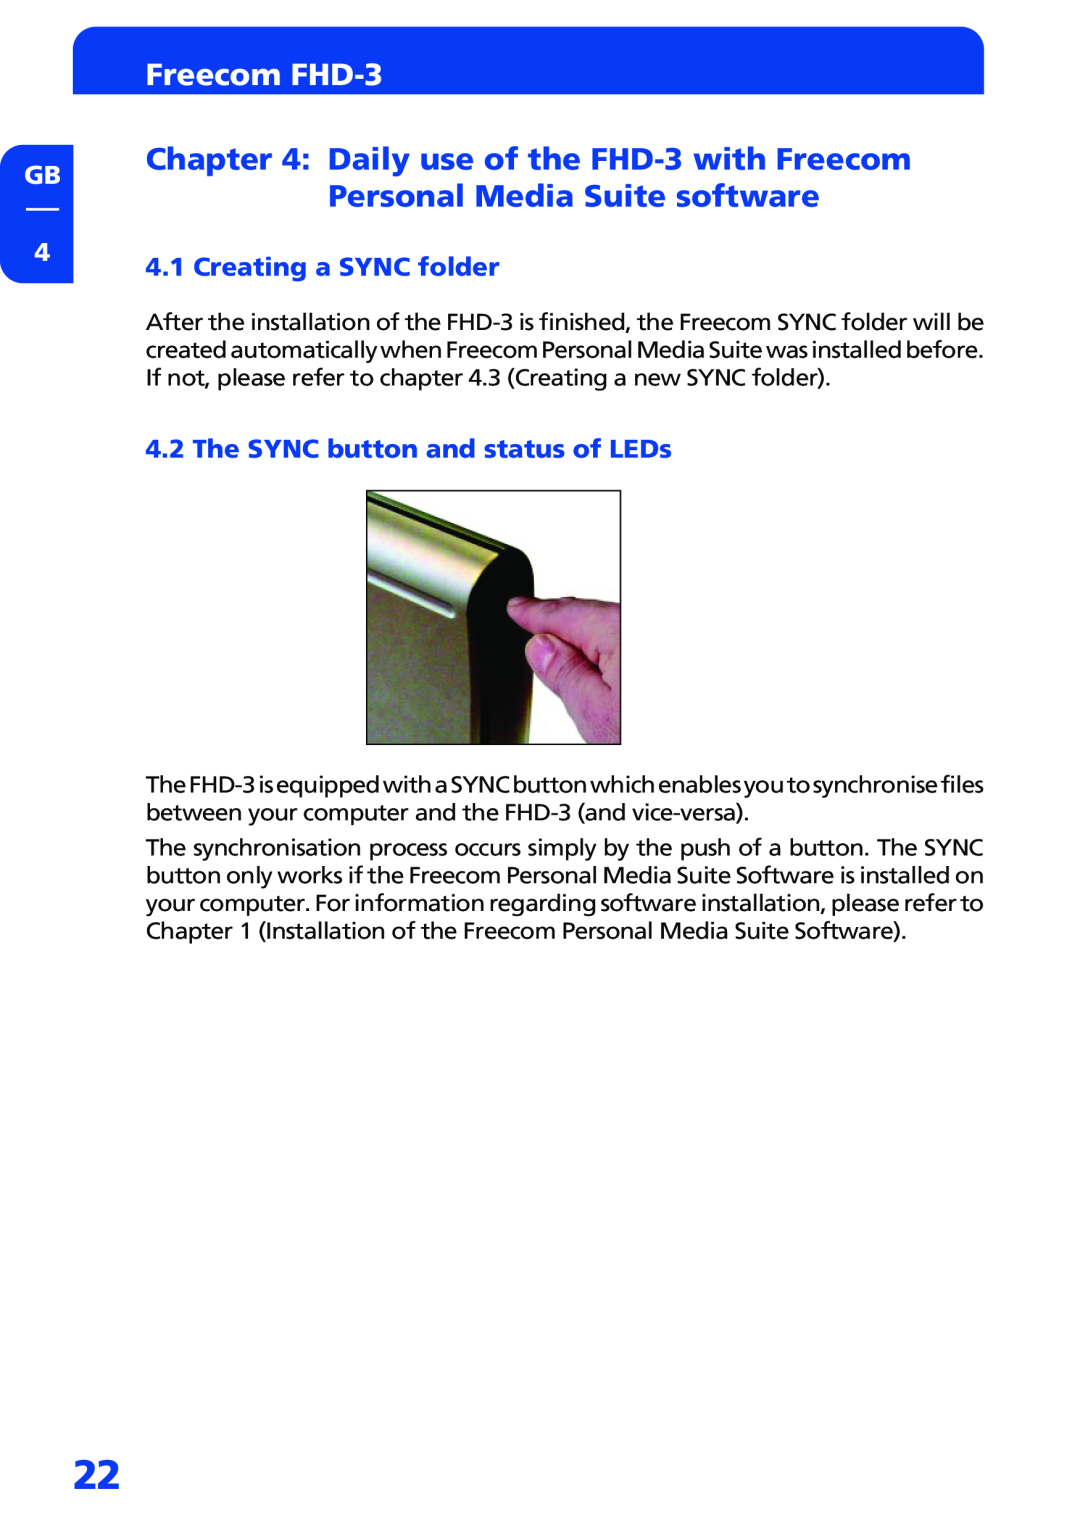 Freecom Technologies manual Creating a SYNC folder, The SYNC button and status of LEDs, Freecom FHD-3 